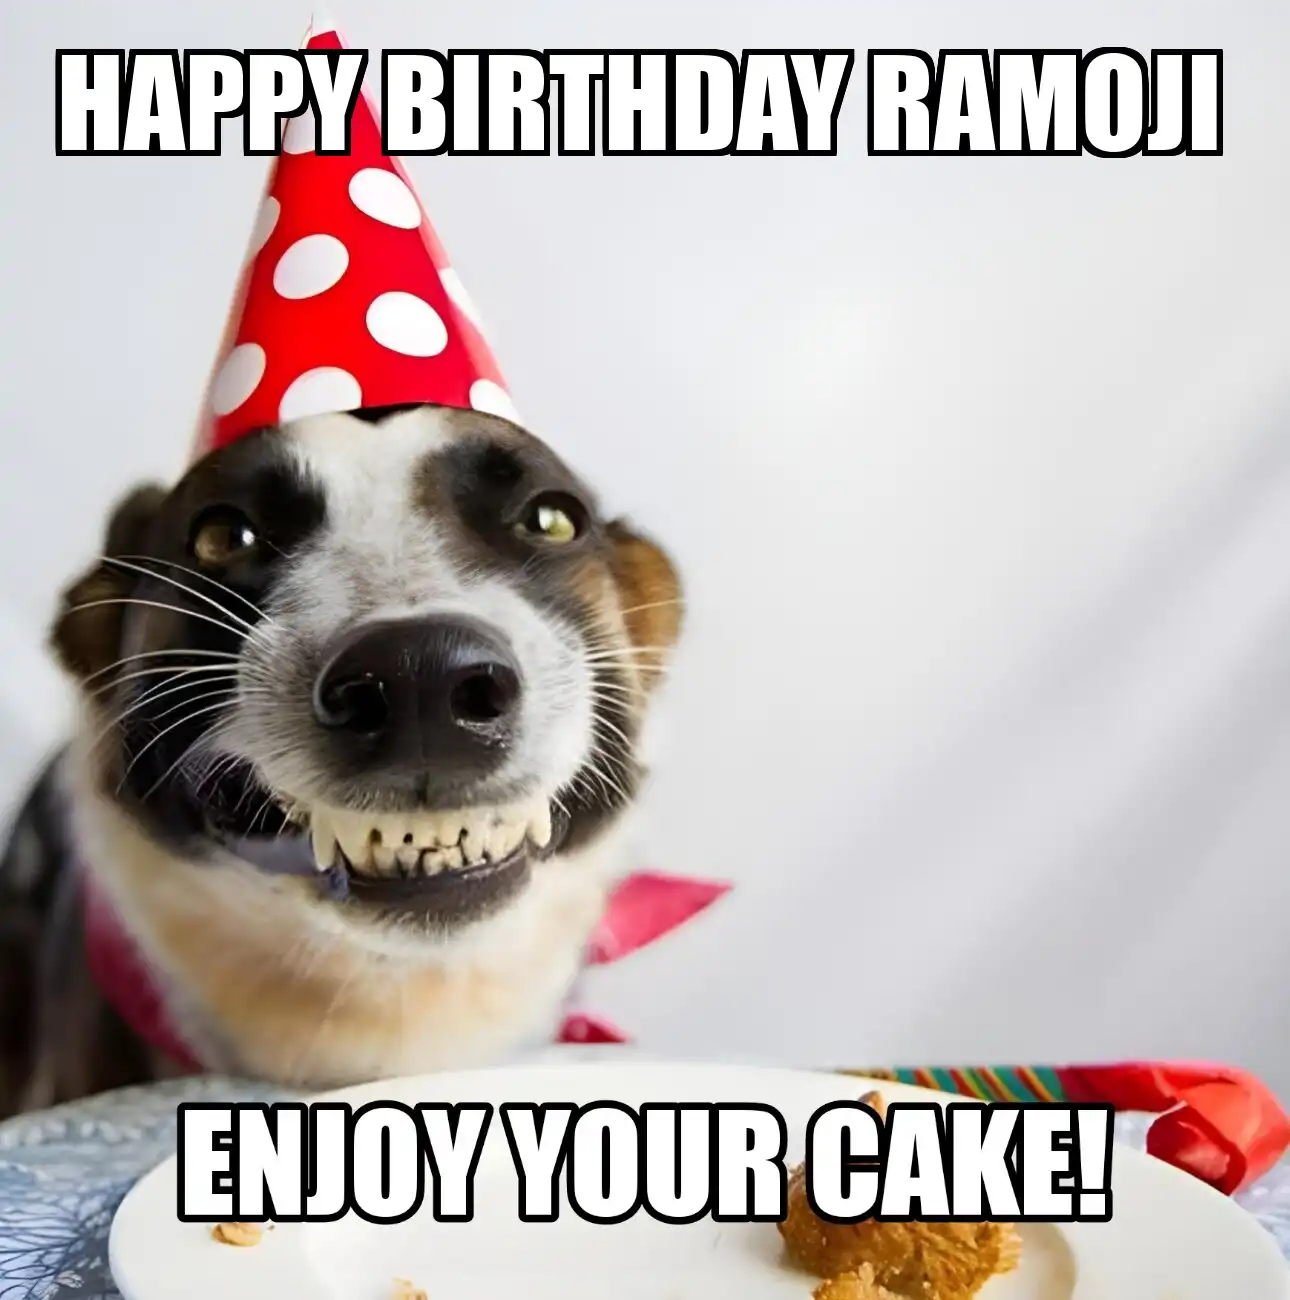 Happy Birthday Ramoji Enjoy Your Cake Dog Meme